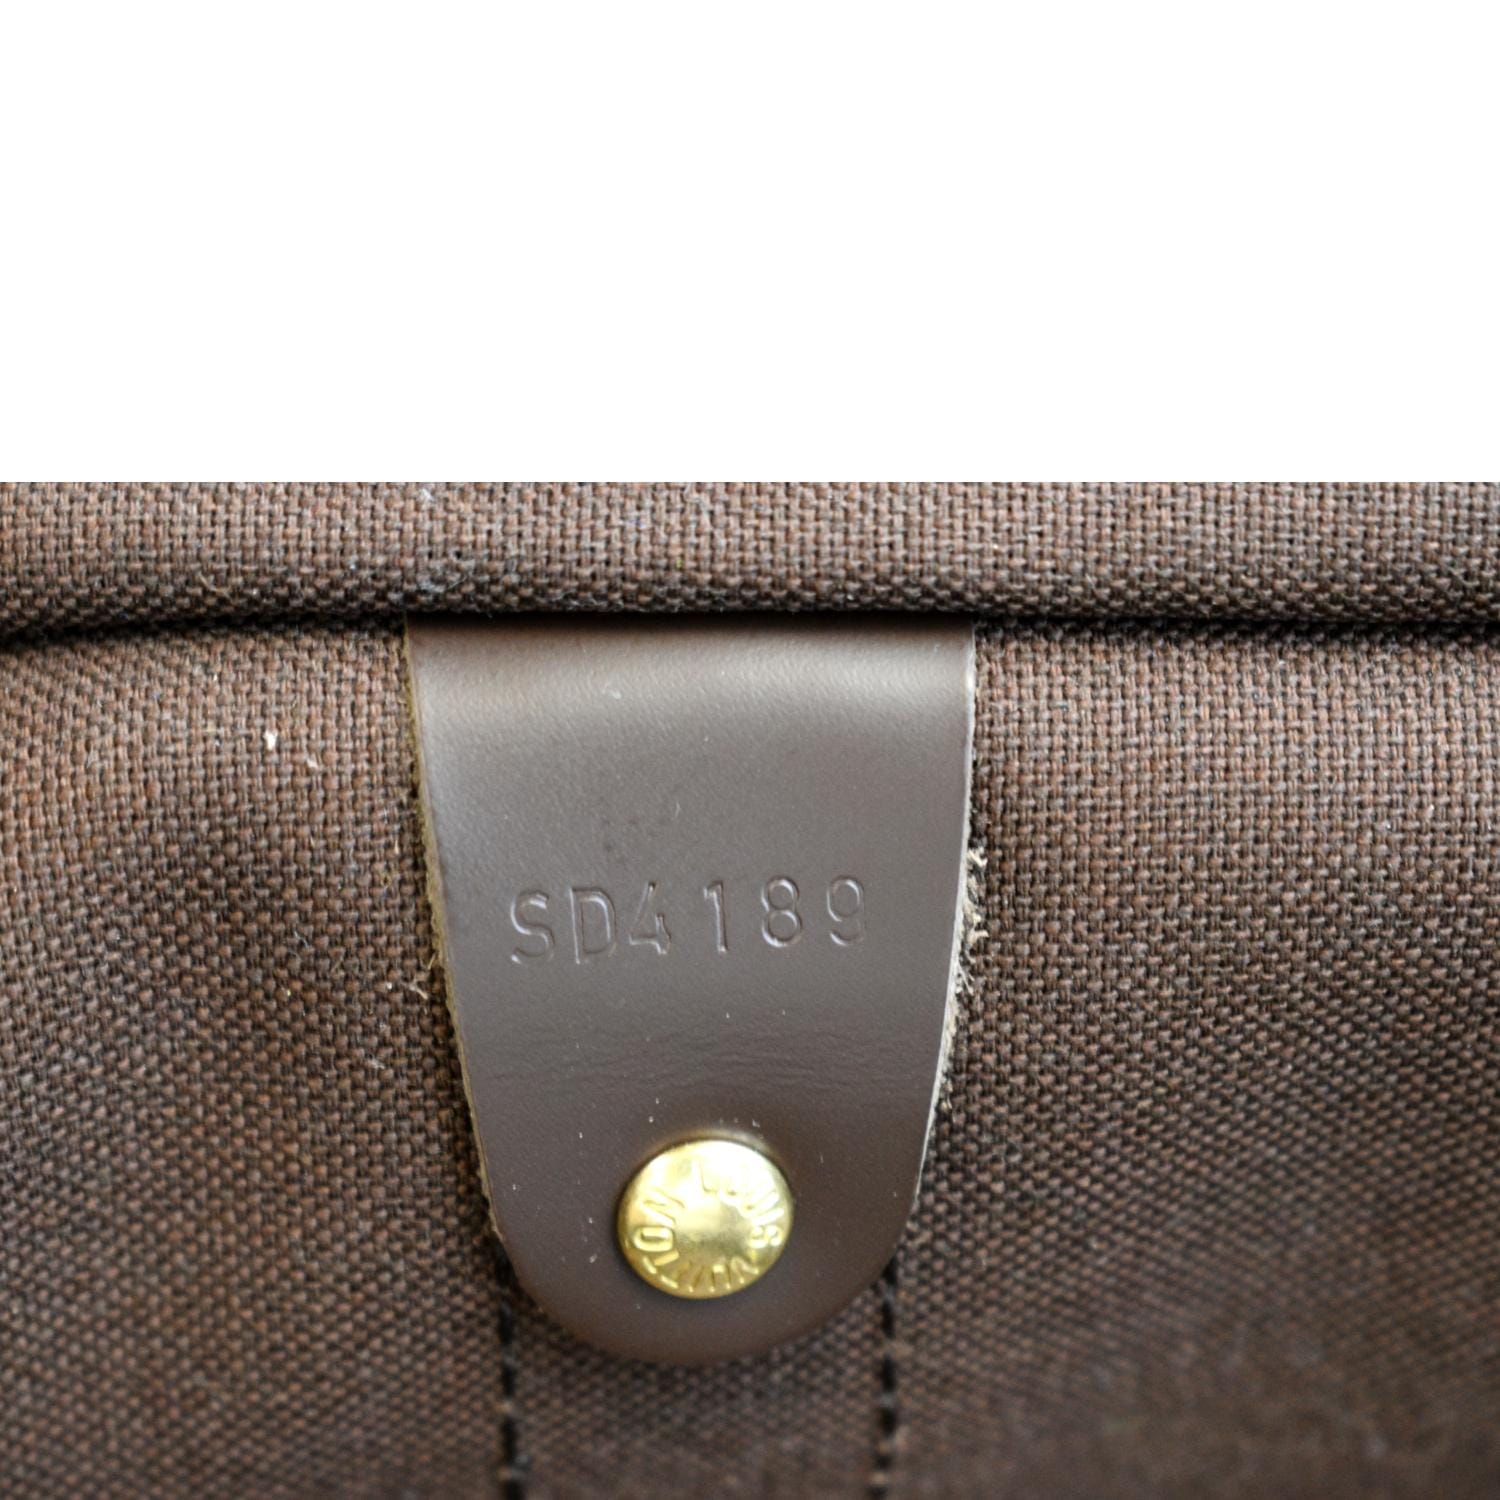 Louis Vuitton Damier Ebene Keepall Bandoulière 55 - Brown Luggage